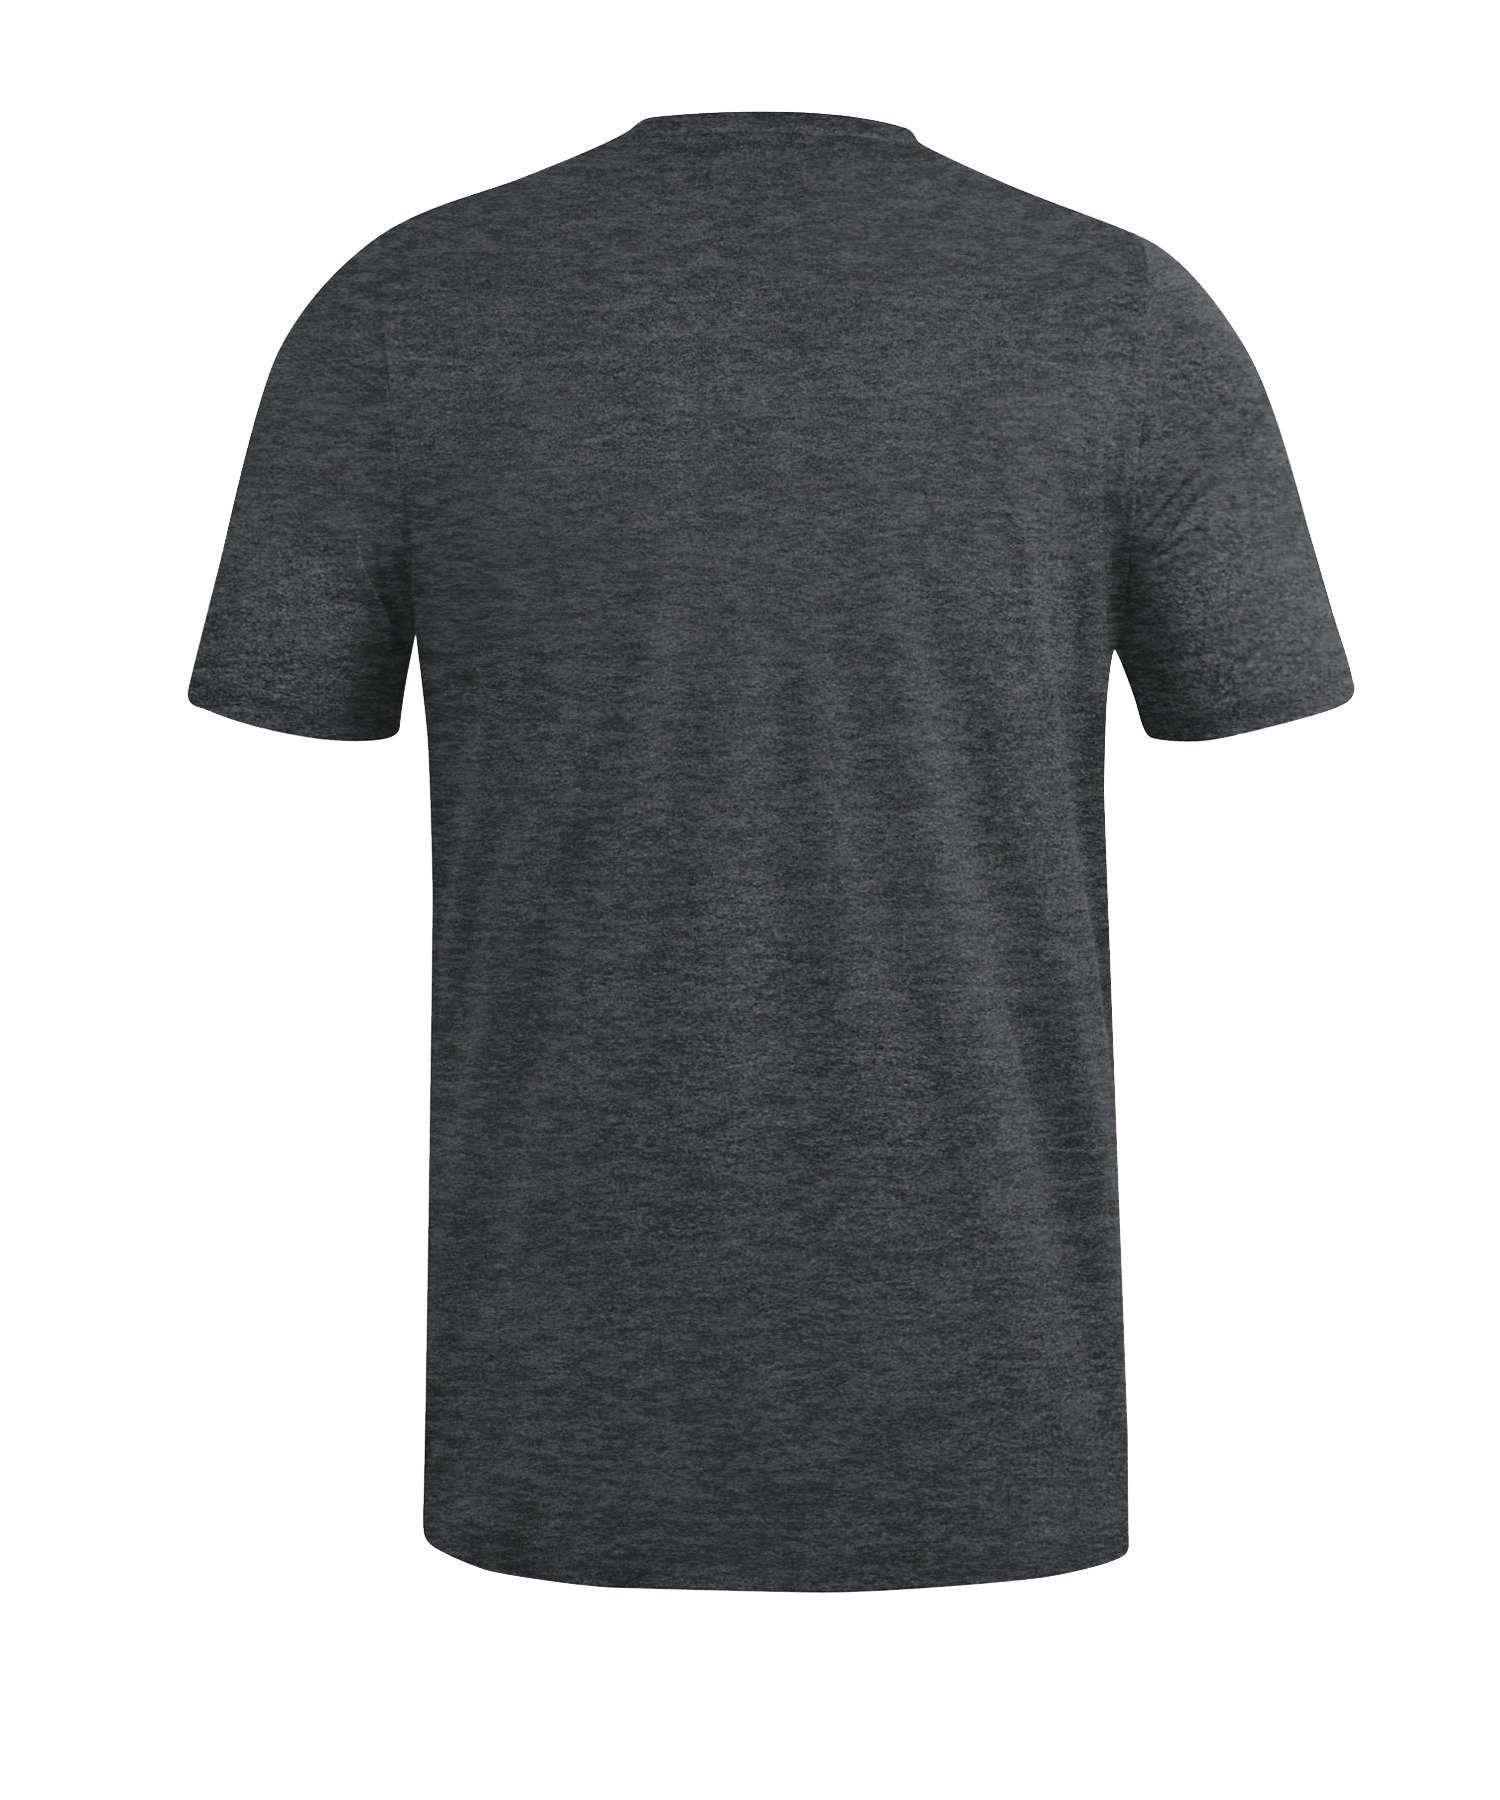 Jako T-Shirt T-Shirt Premium Basic grauschwarz default